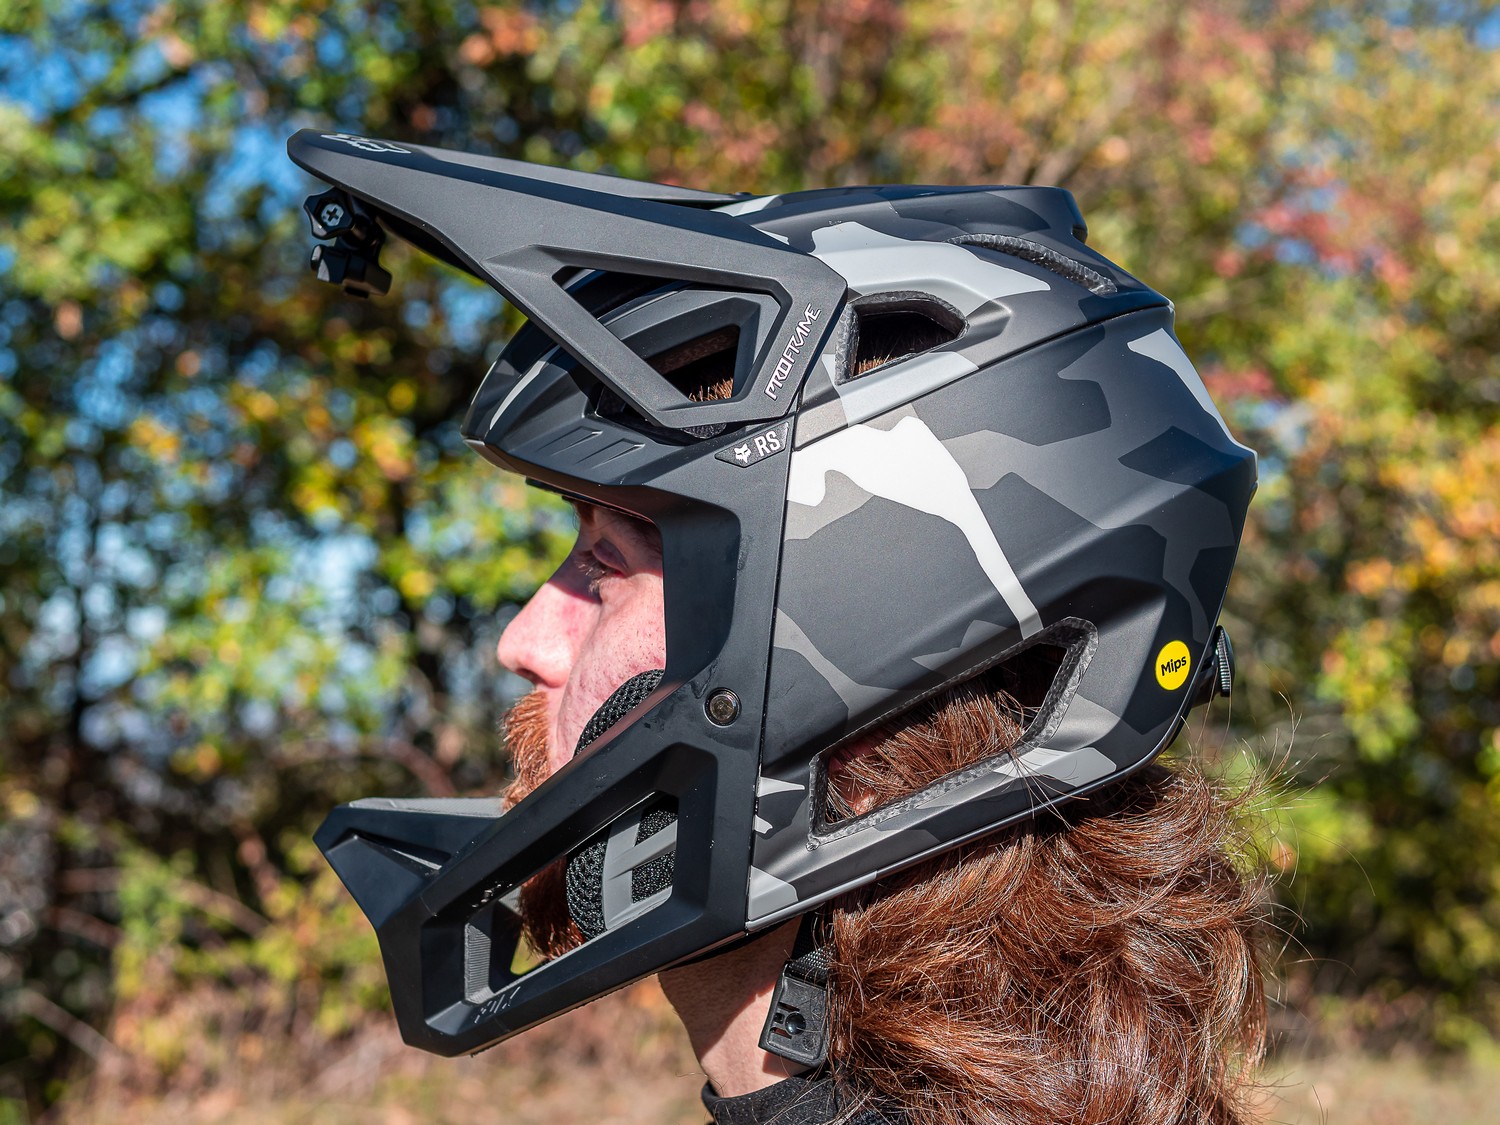 Fox Proframe RS casco full-face per enduro in test - 4ActionSport